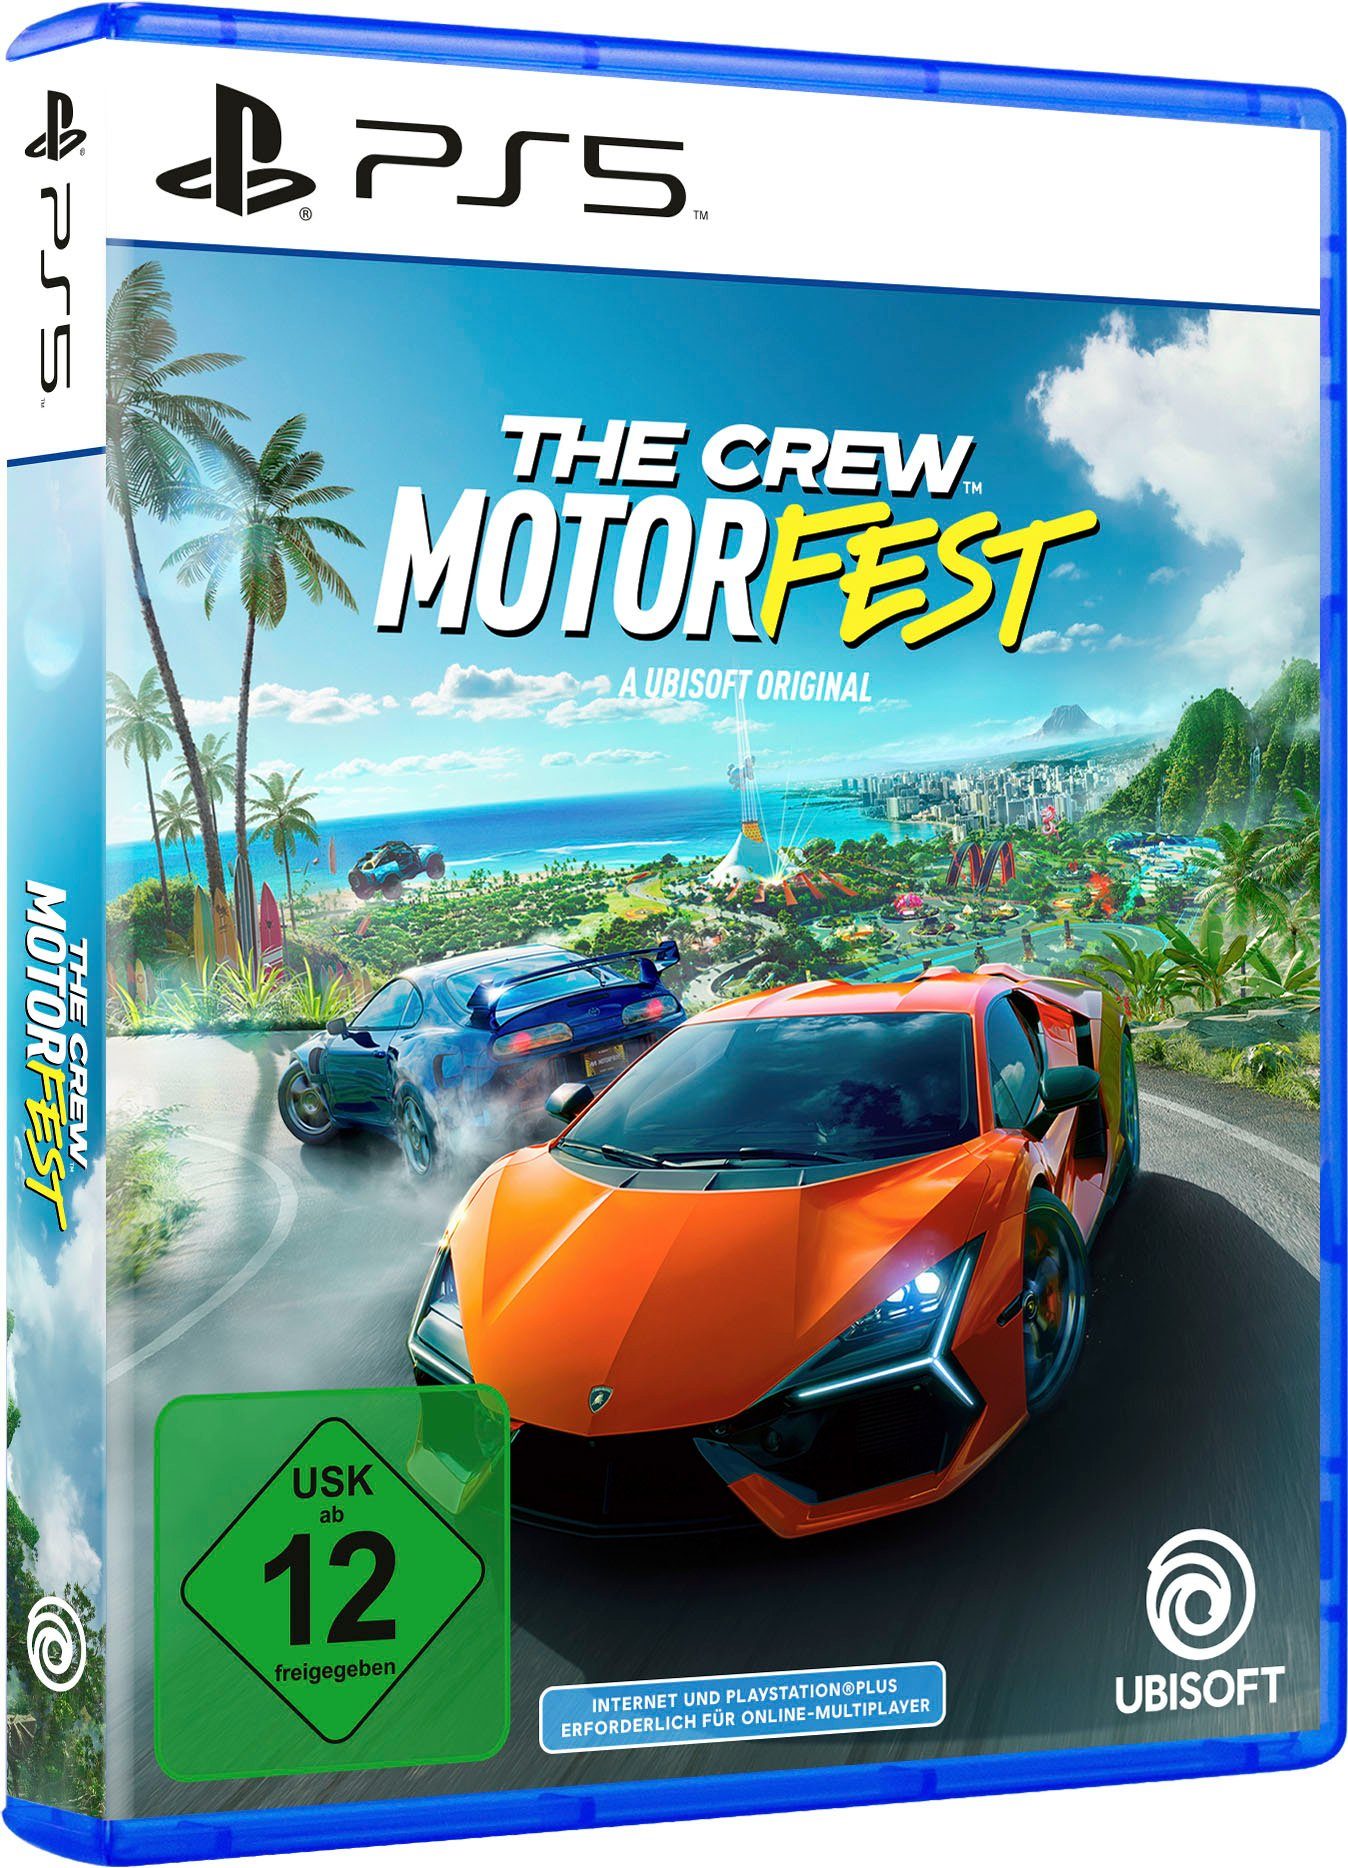 Edition 5 The Motorfest UBISOFT PlayStation Standard Crew™